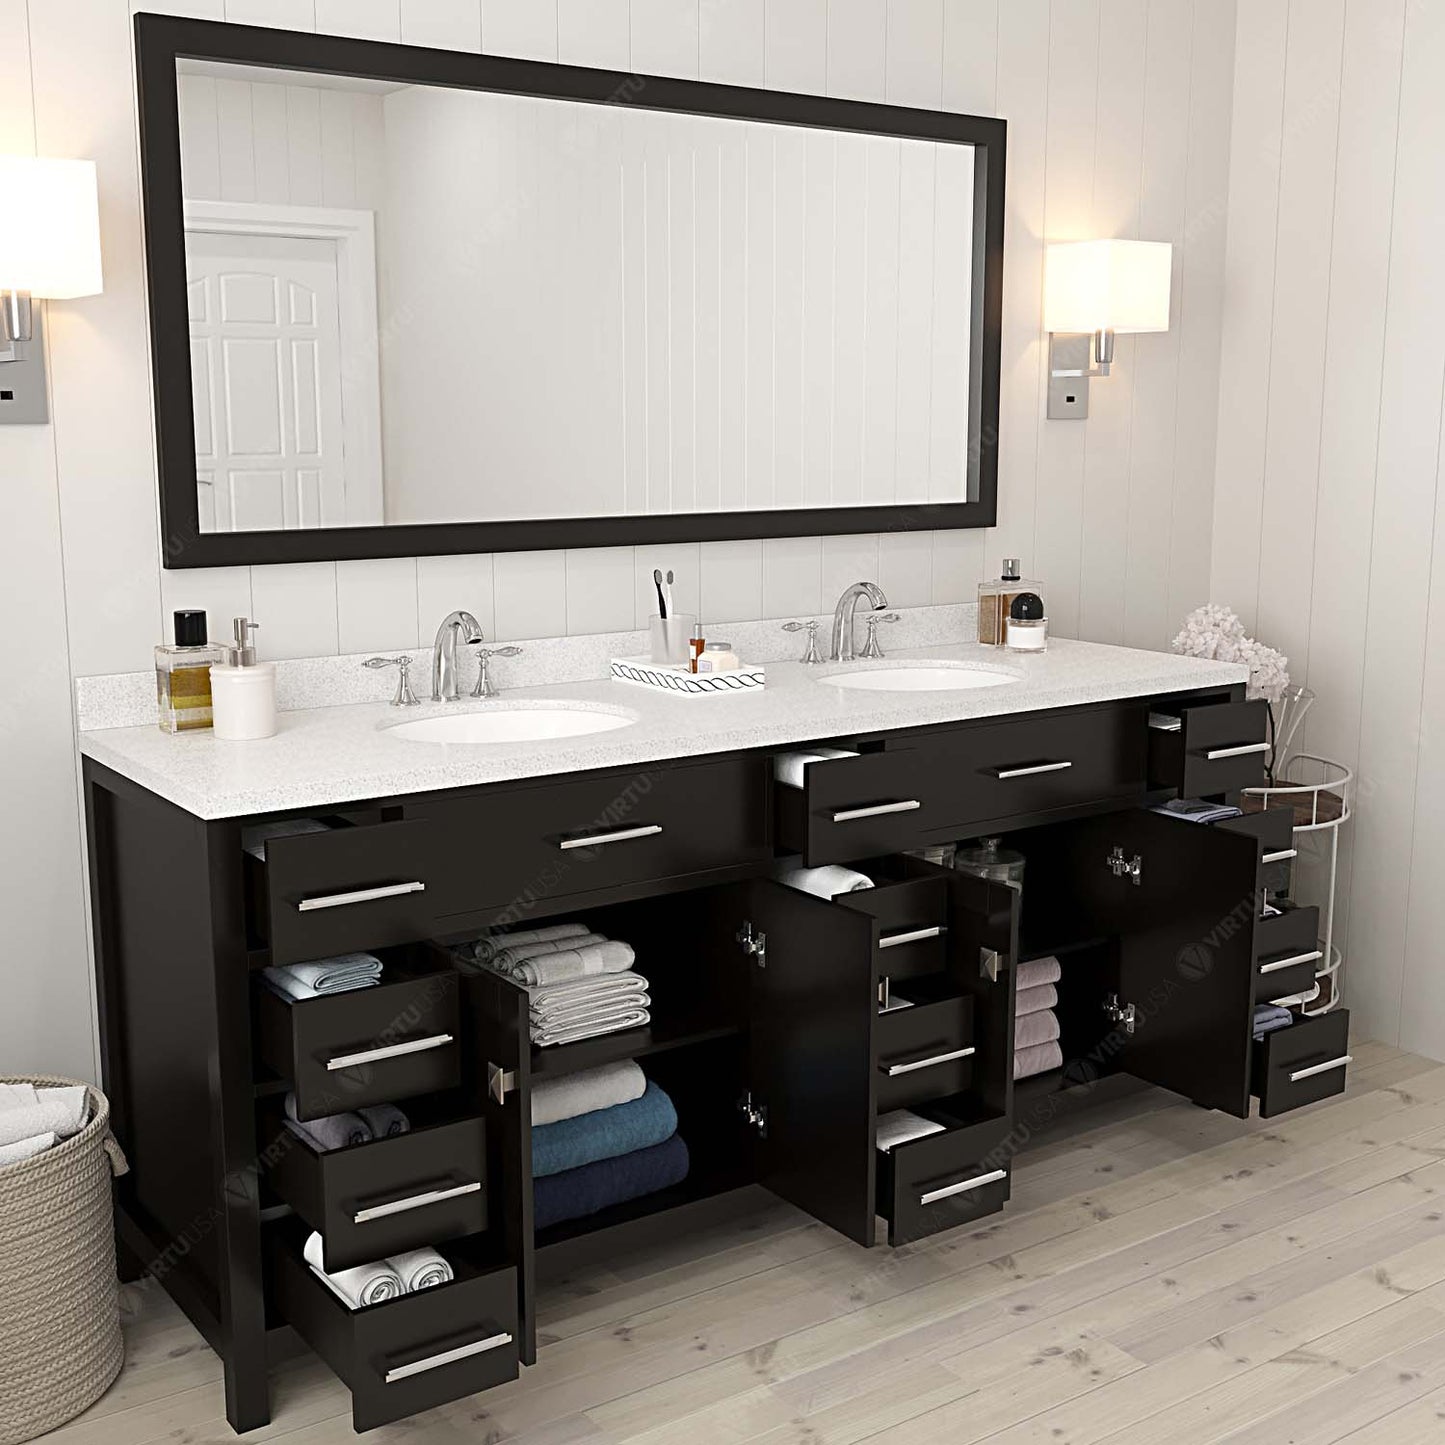 Virtu USA Caroline Parkway 78" Double Bath Vanity in Espresso with Dazzle White Top and Round Sink with Mirror - Luxe Bathroom Vanities Luxury Bathroom Fixtures Bathroom Furniture